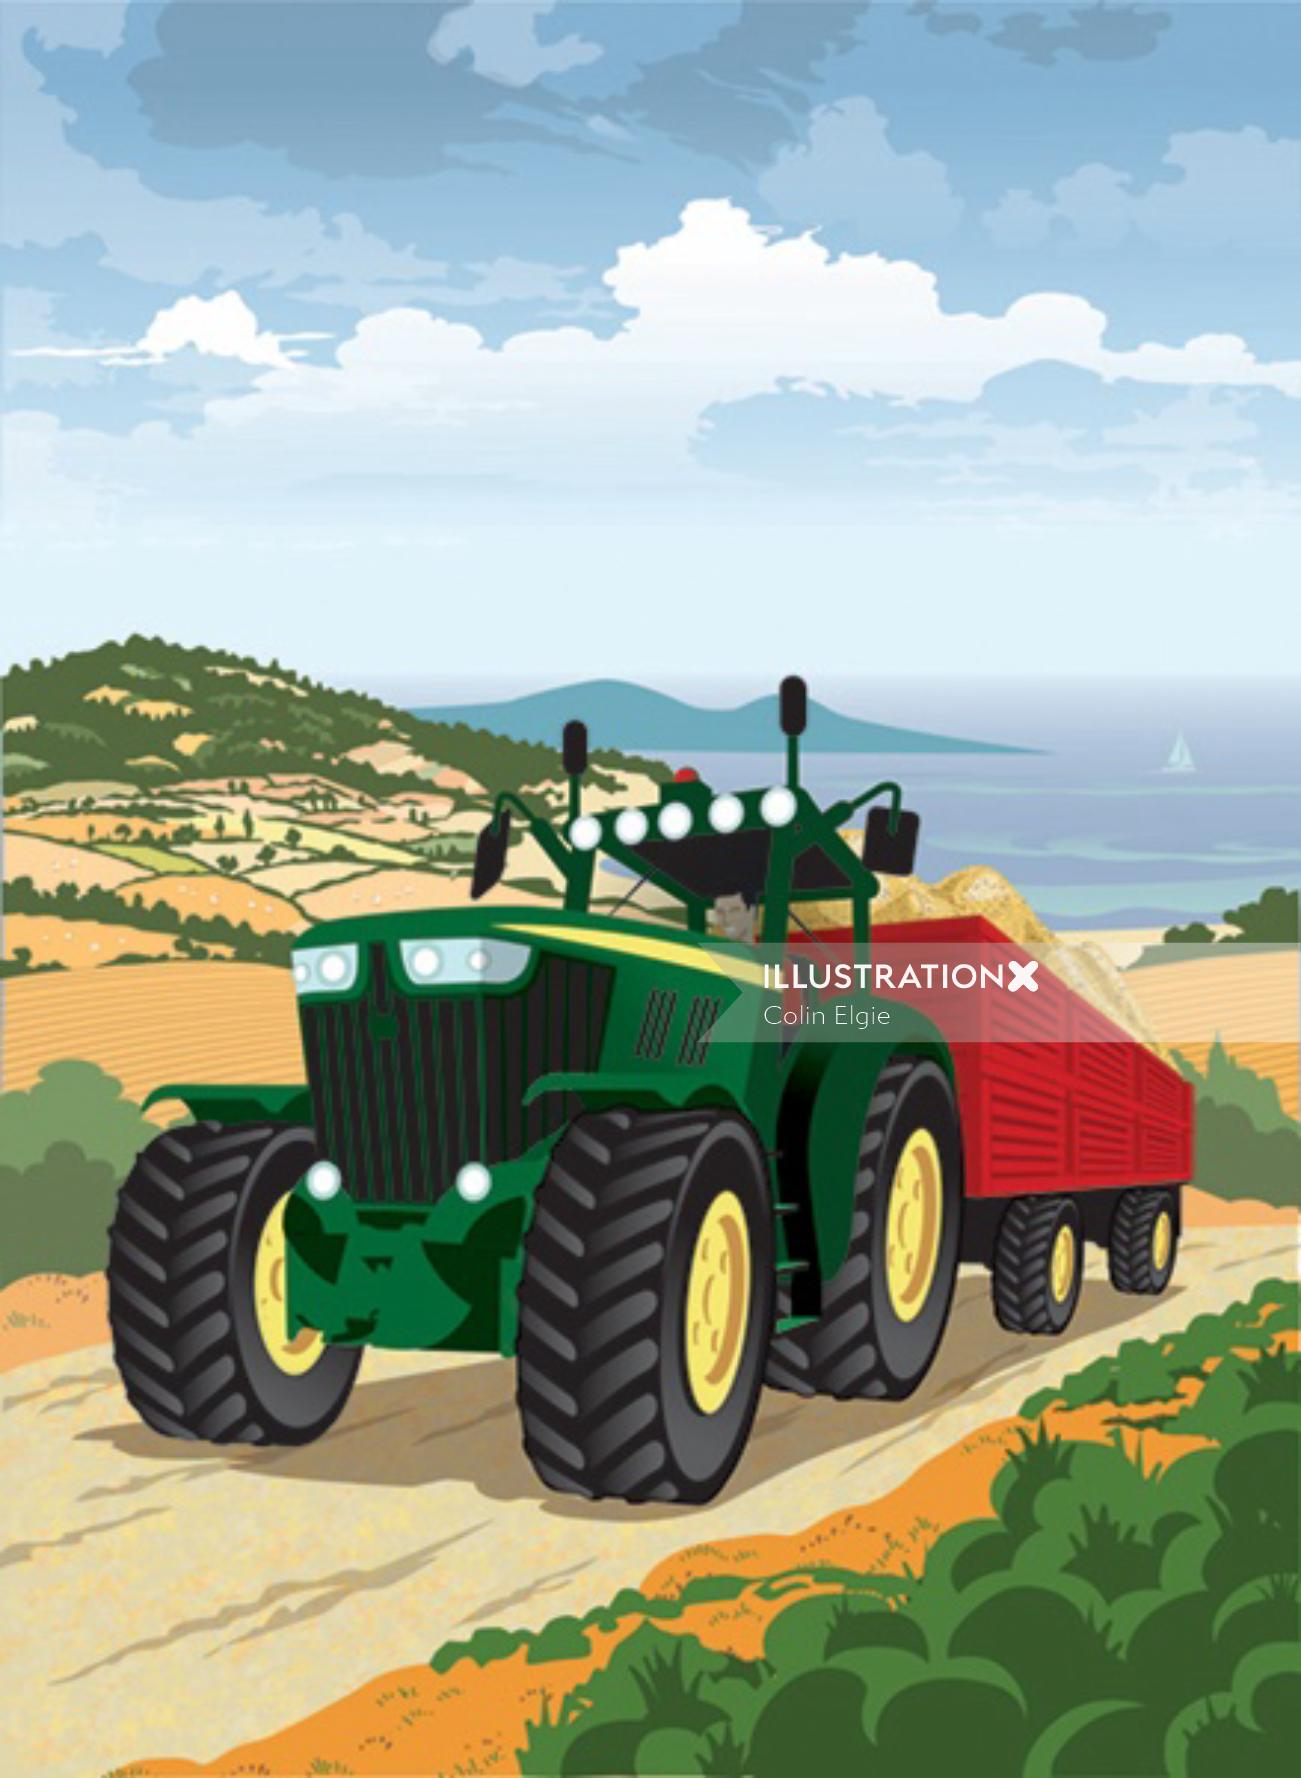 Farm Tractor in Rural Scene 